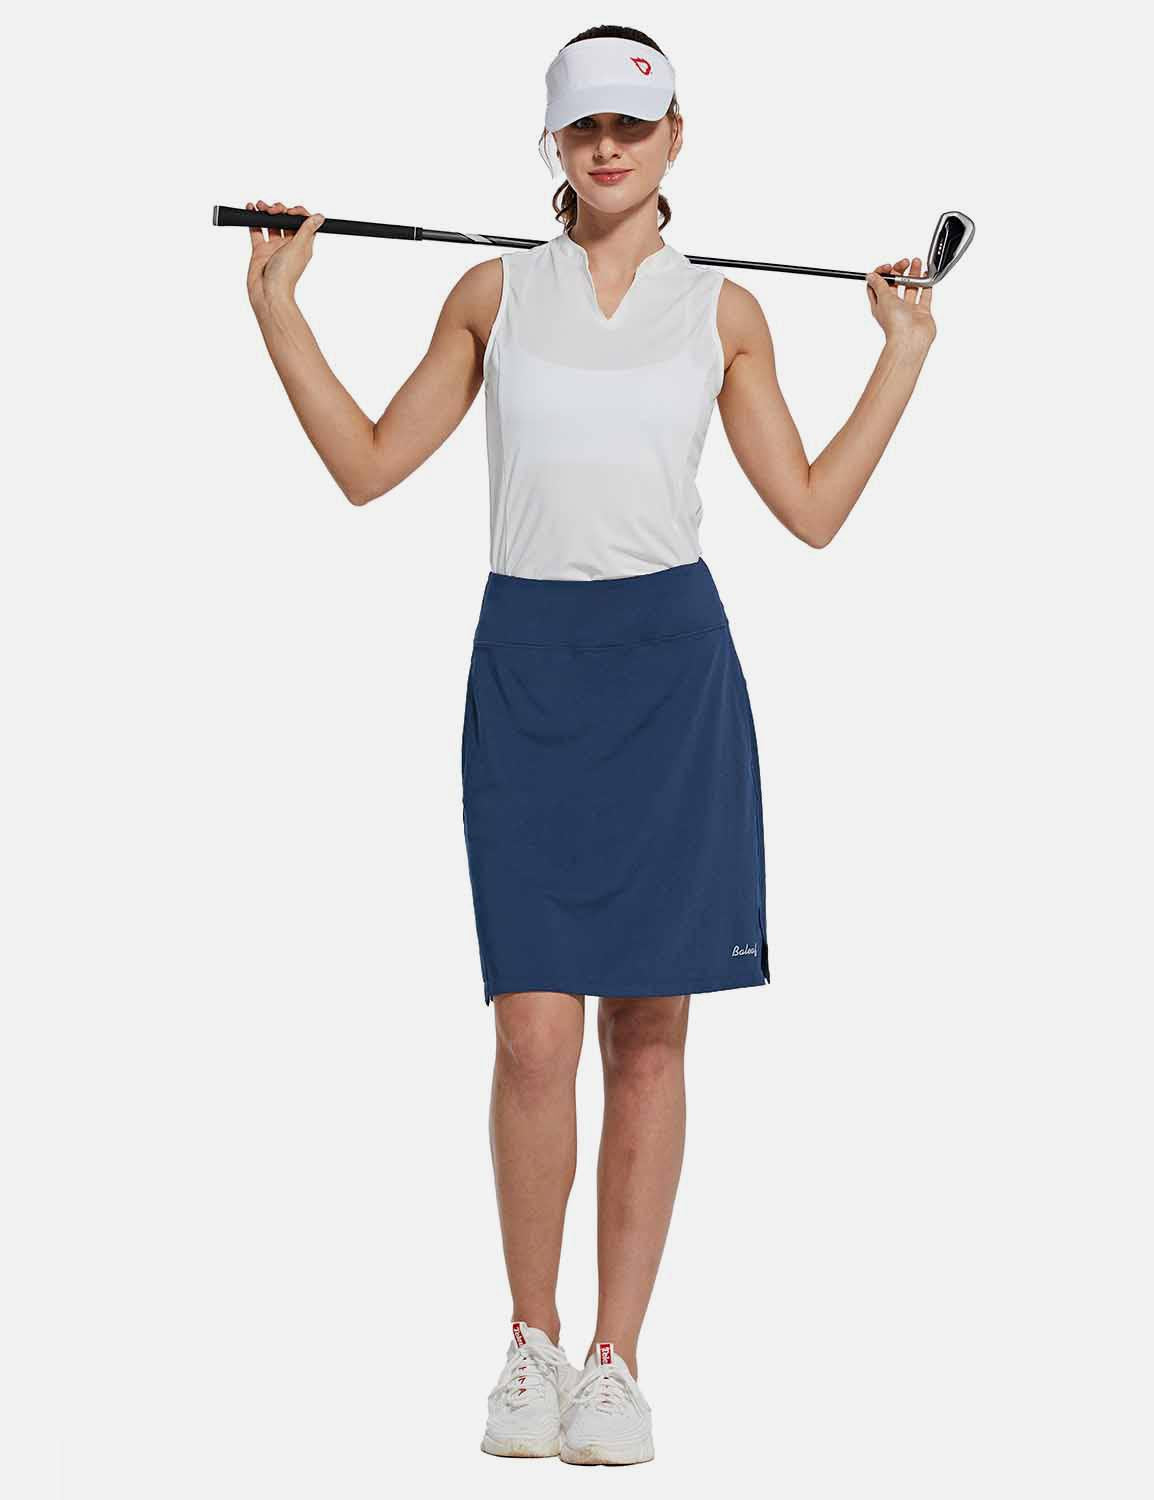 Baleaf Womens UPF50+ 2-in-1 Knee-Length Golf Skorts w Mesh Lining cbd002 Peacoat Full